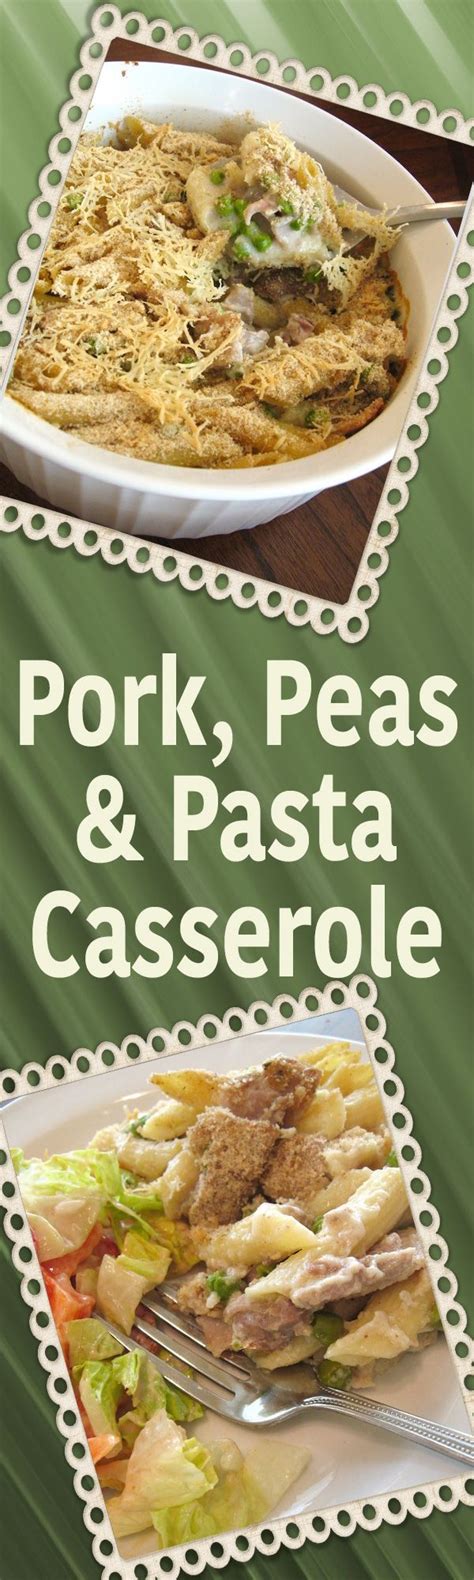 Add the shredded pork and roasted veggies. Pork Peas & Pasta Casserole | Leftover pork recipes, Pork ...